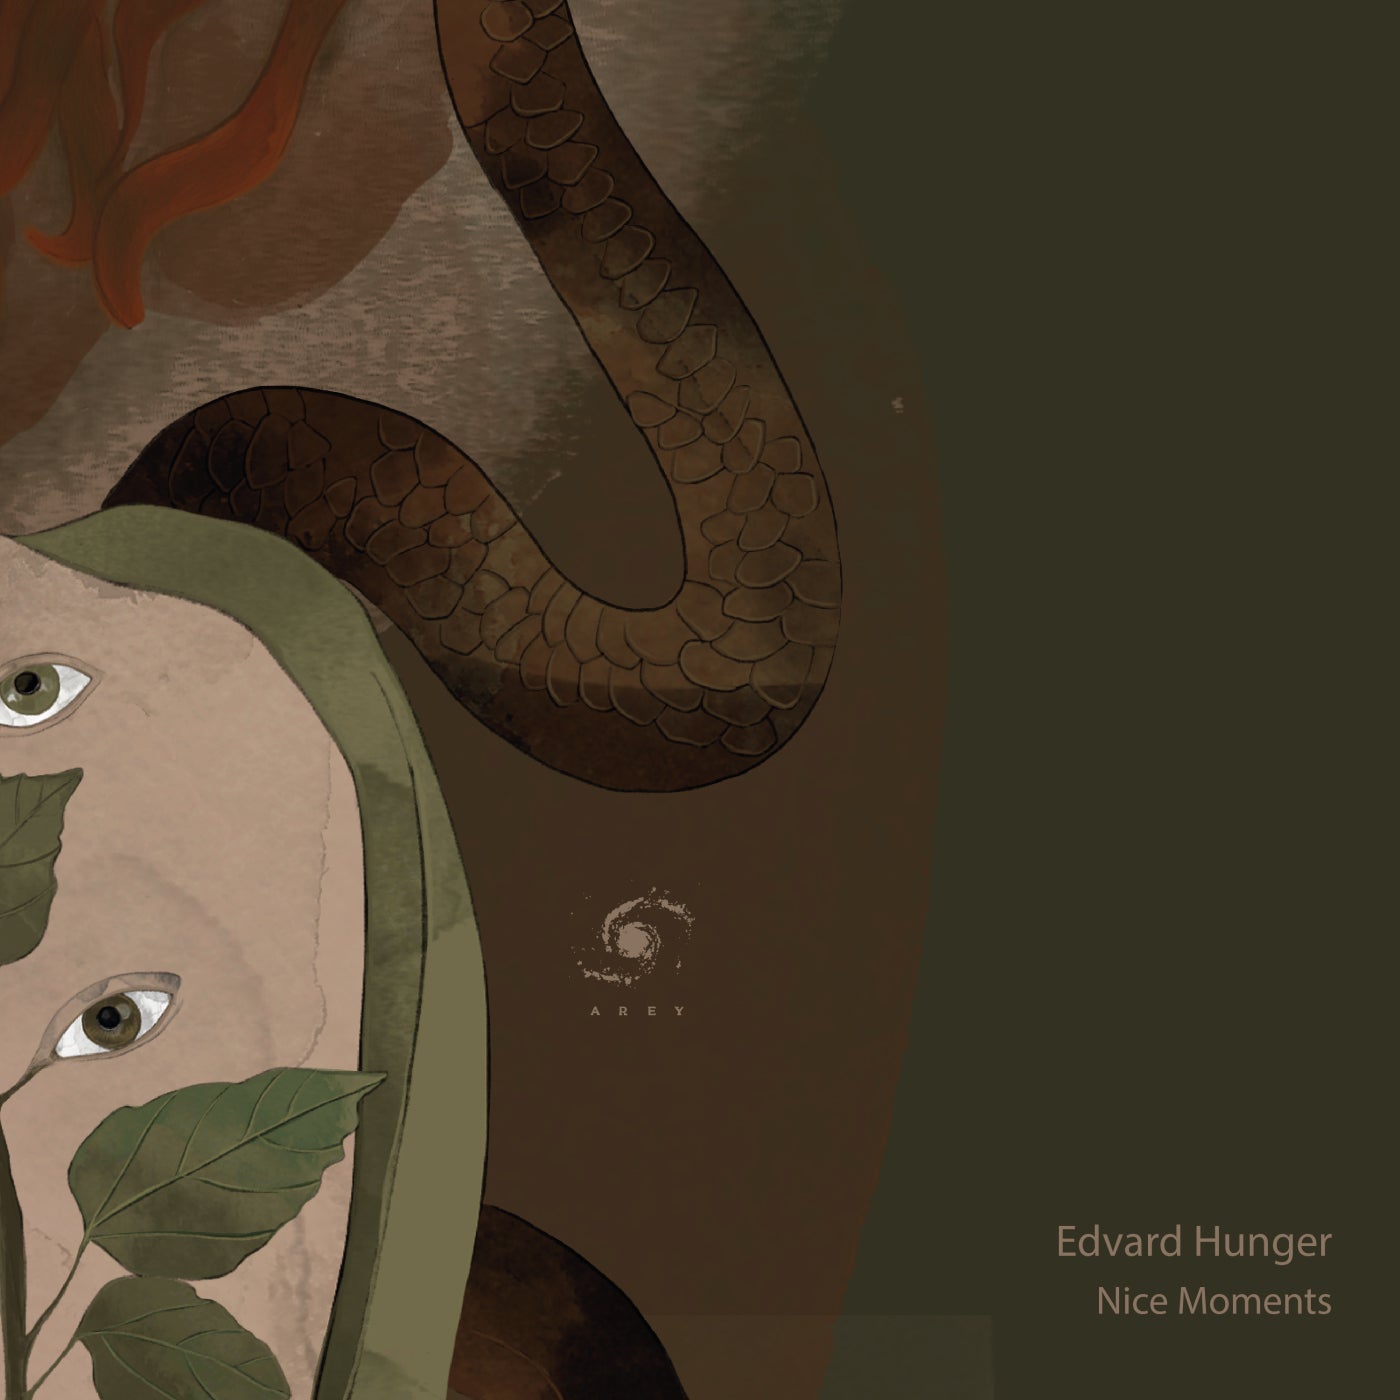 Edvard Hunger - Nice Moments [Arey]